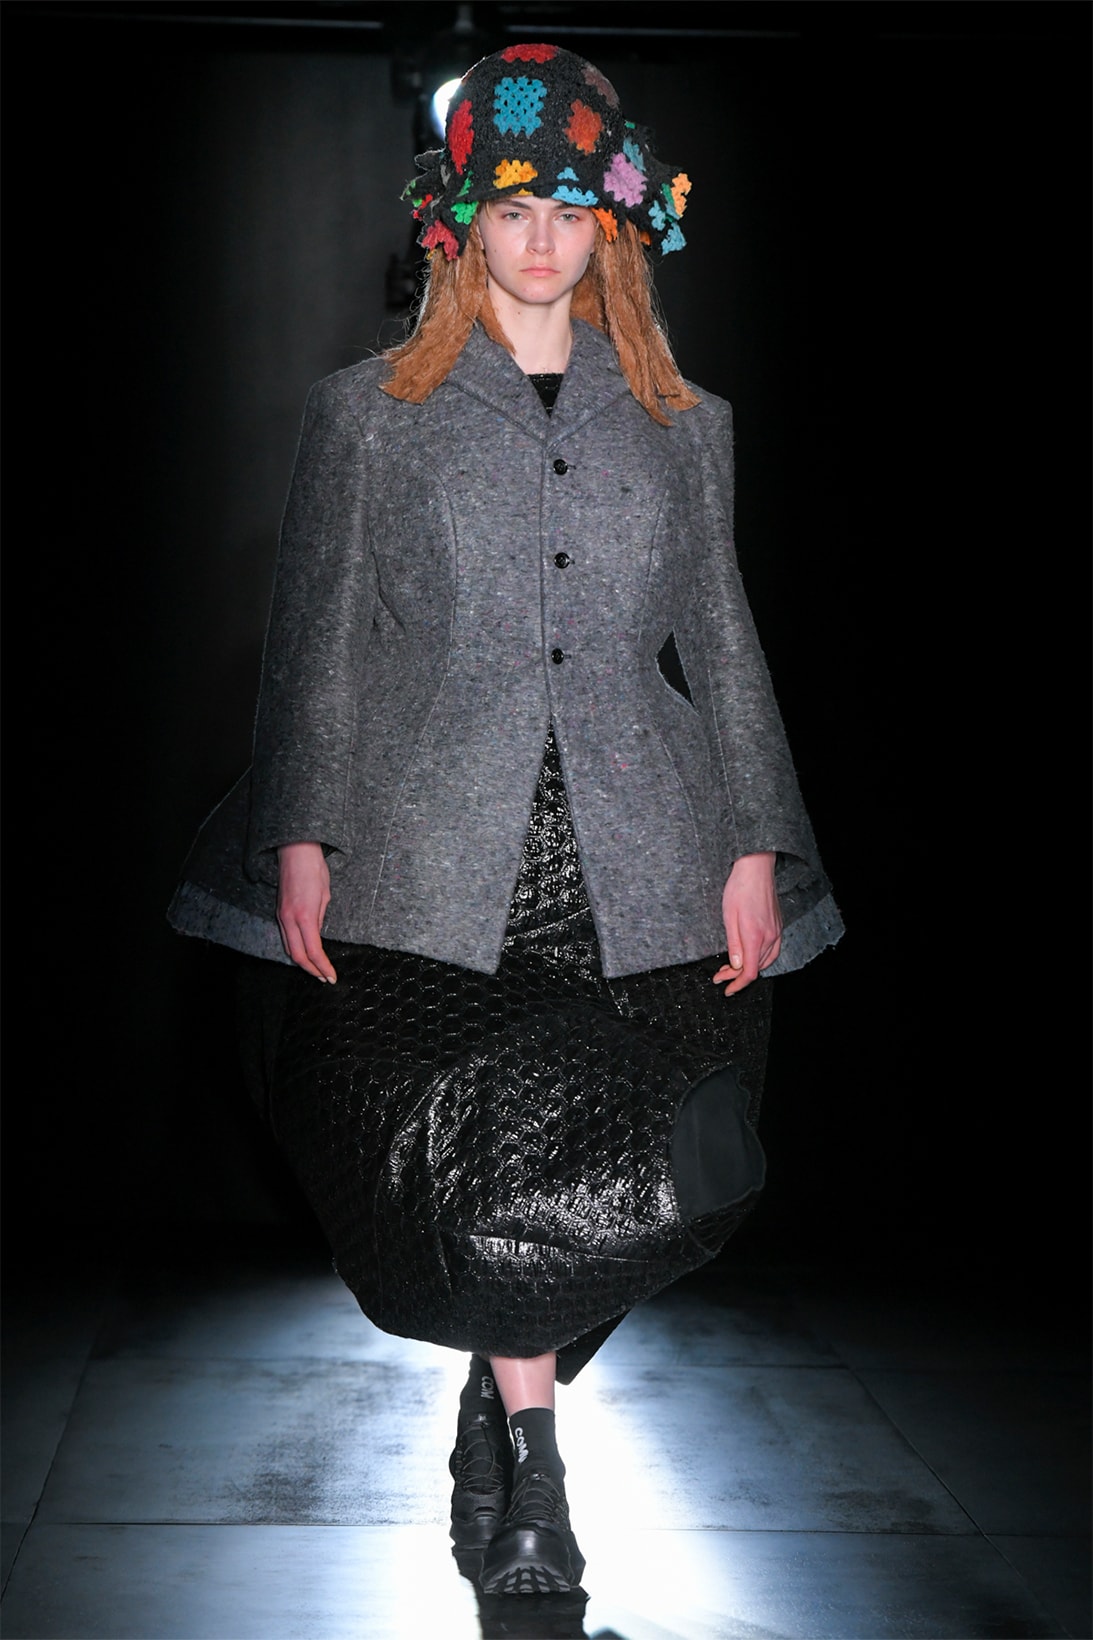 comme des garcons fall winter collection salomon pulsar platform tokyo runway show oversized coat leather dress black gray